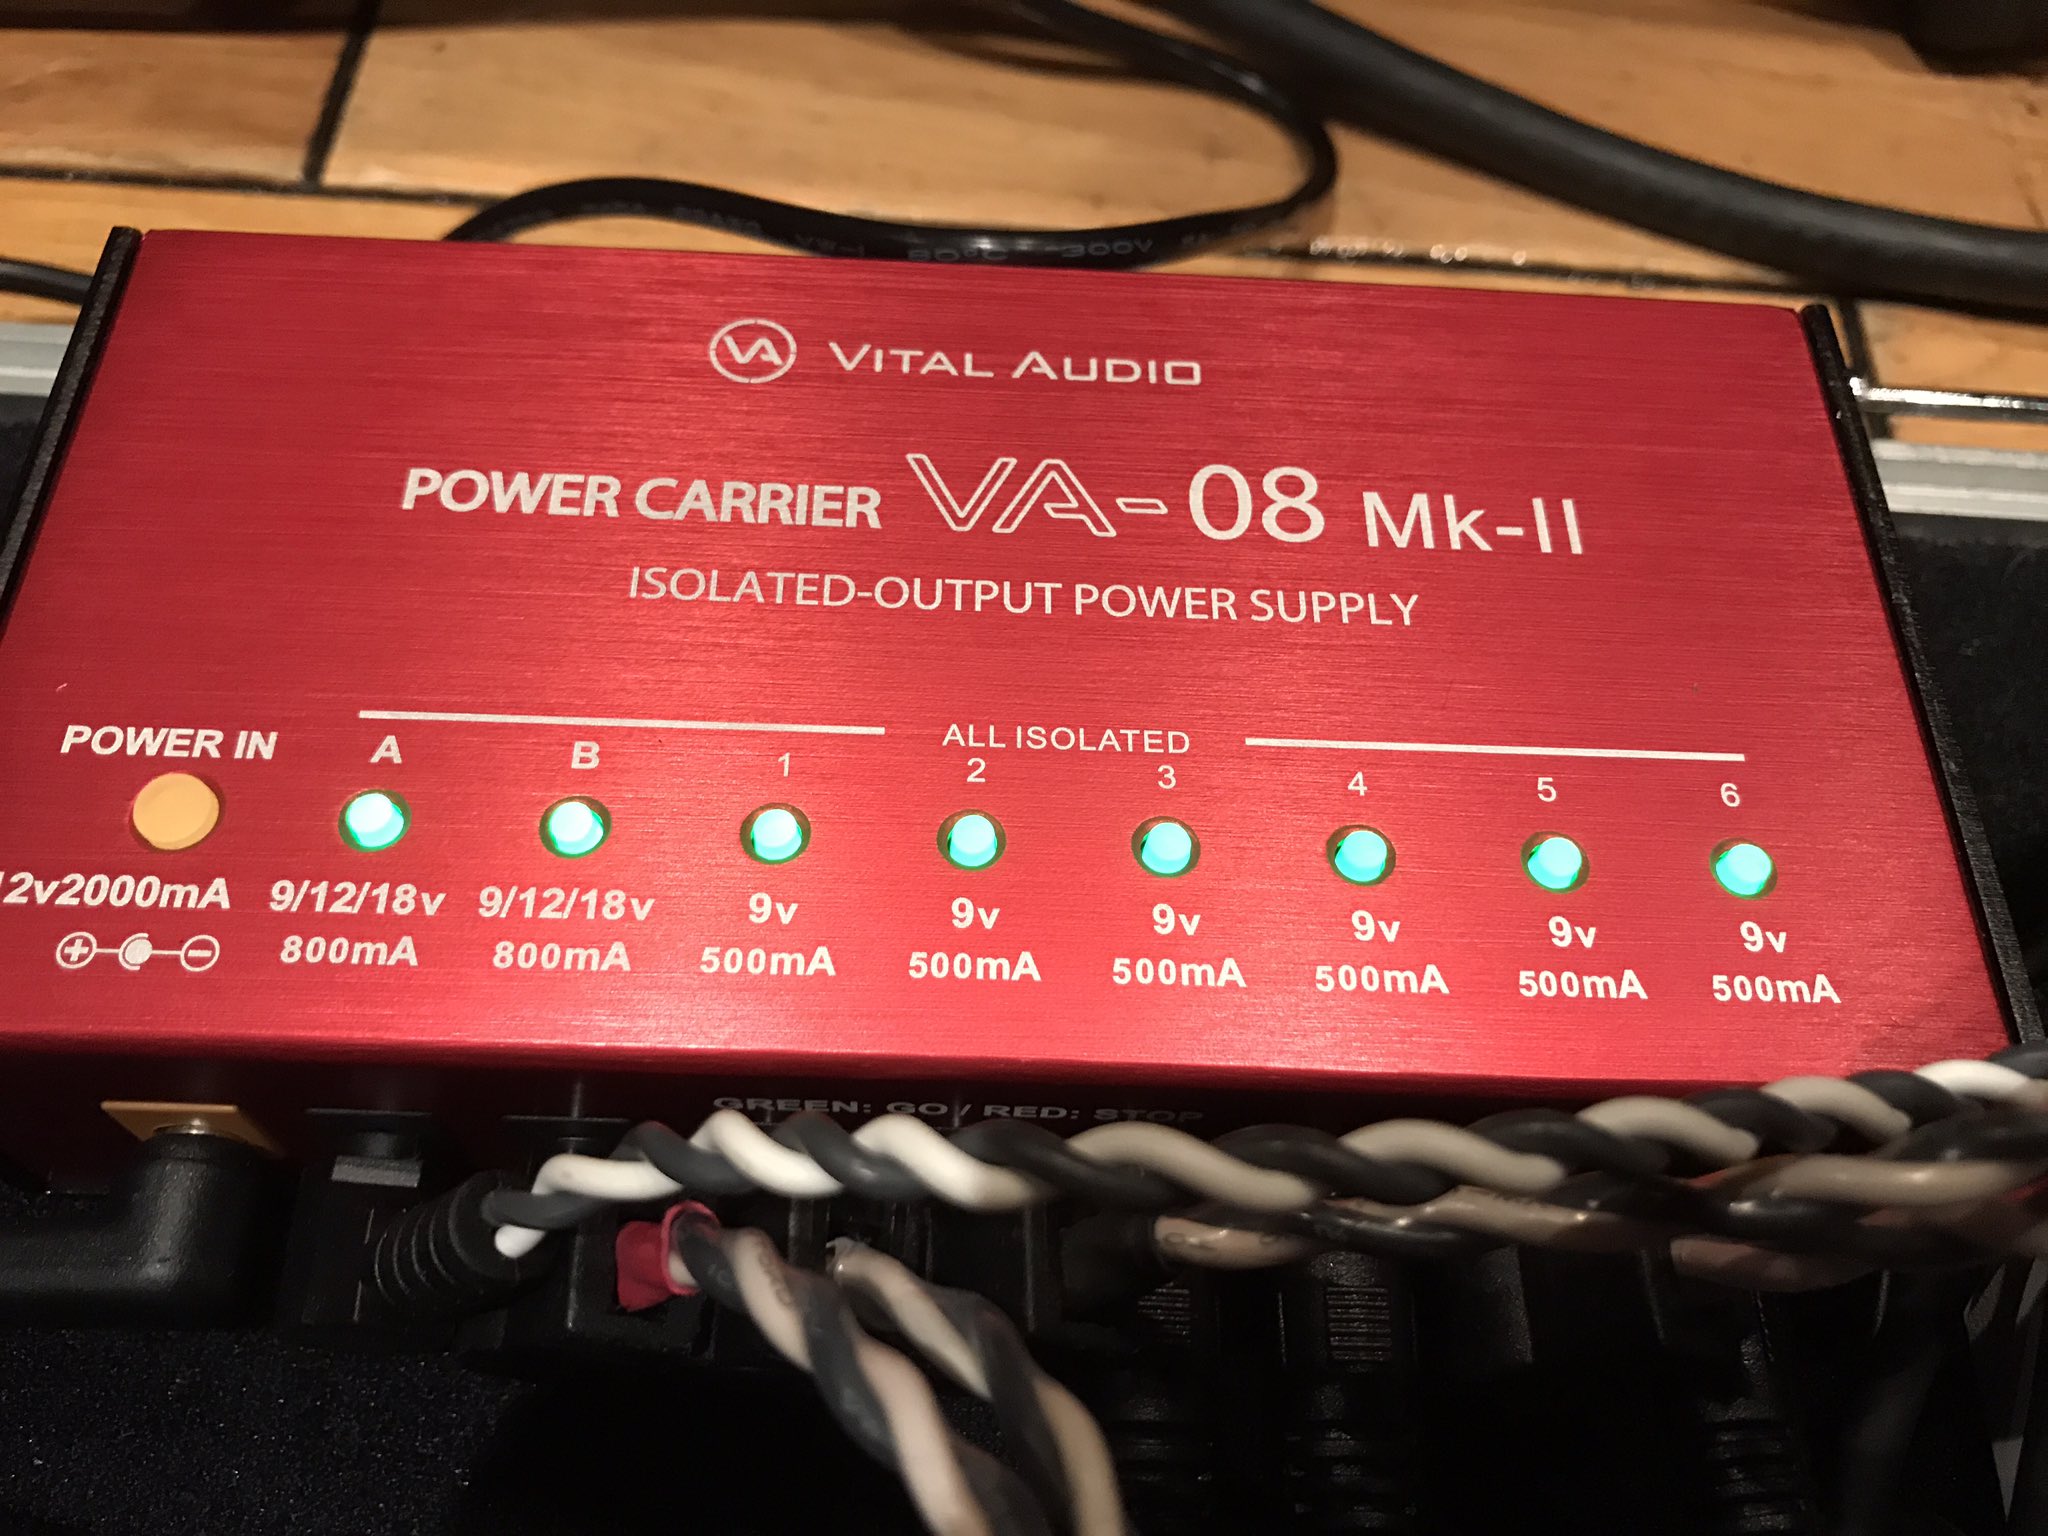 توییتر \ 休日課長 در توییتر: «VITAL AUDIO POWER CARRIER VA-08 Mk 